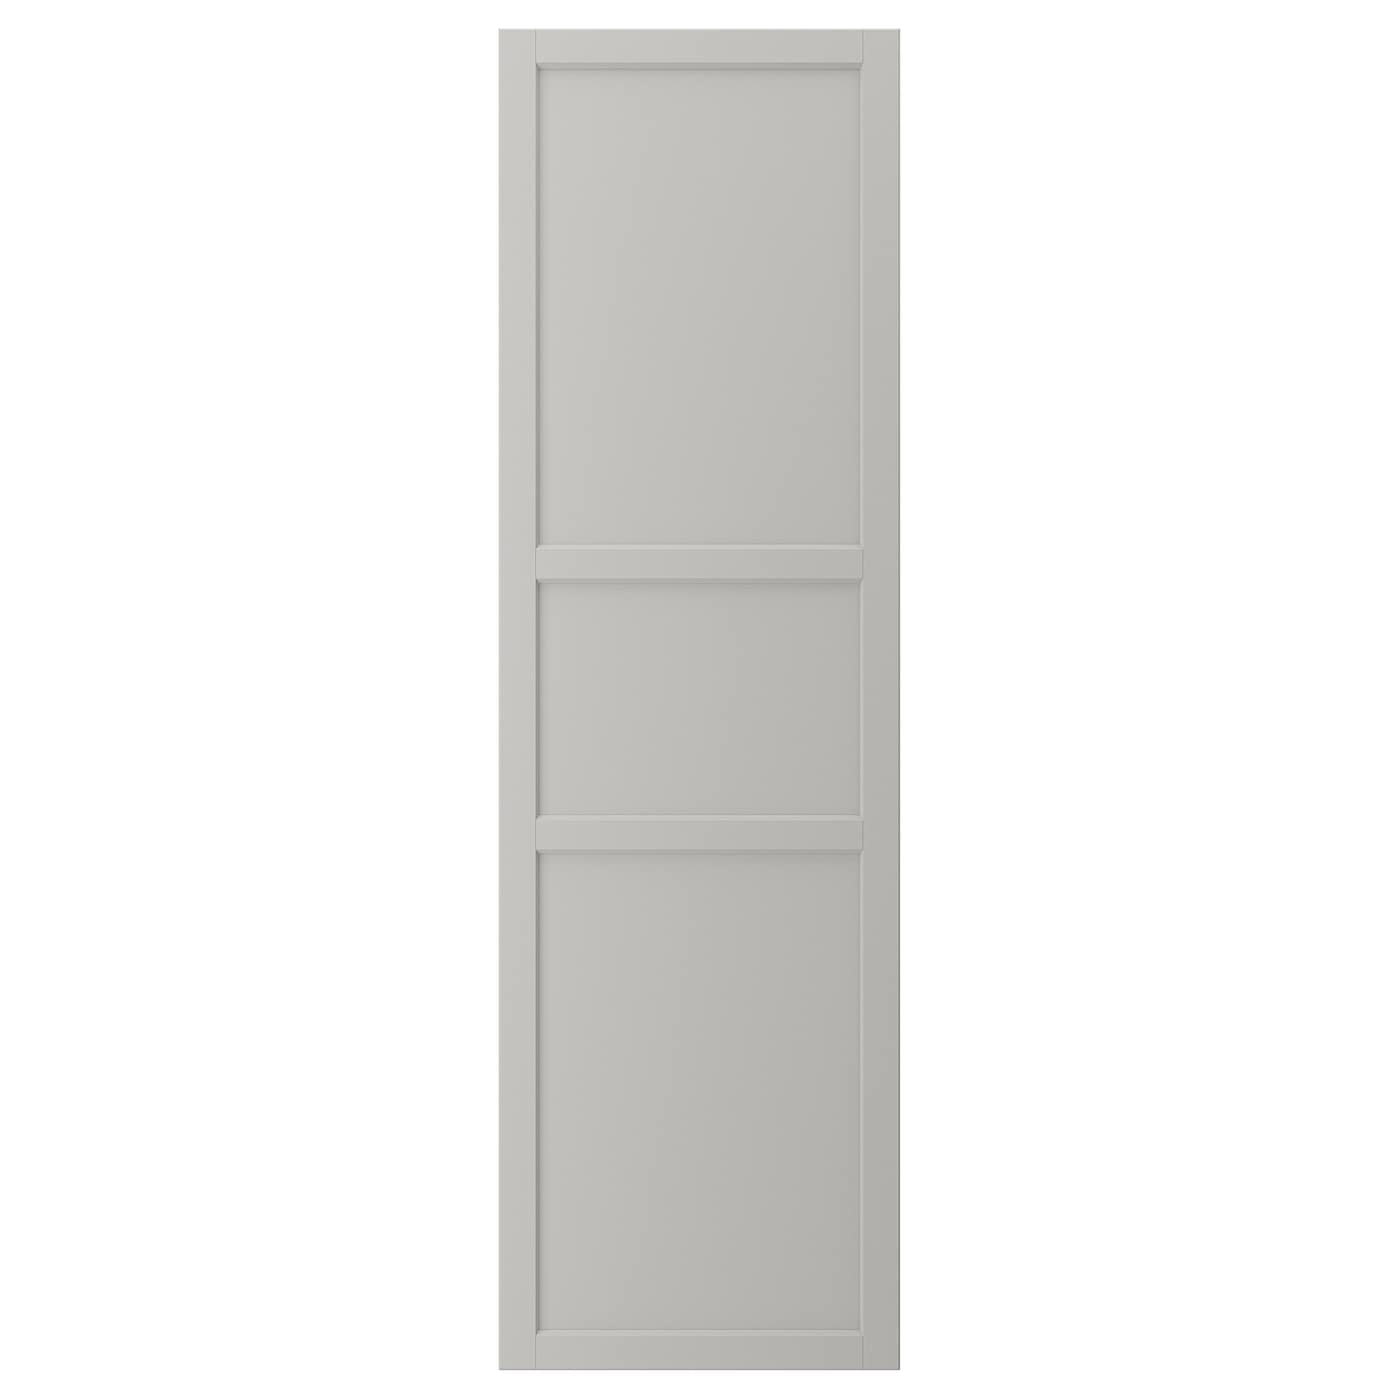 Фасад - IKEA LERHYTTAN, 200х60 см, светло-серый, ЛЕРХЮТТАН ИКЕА